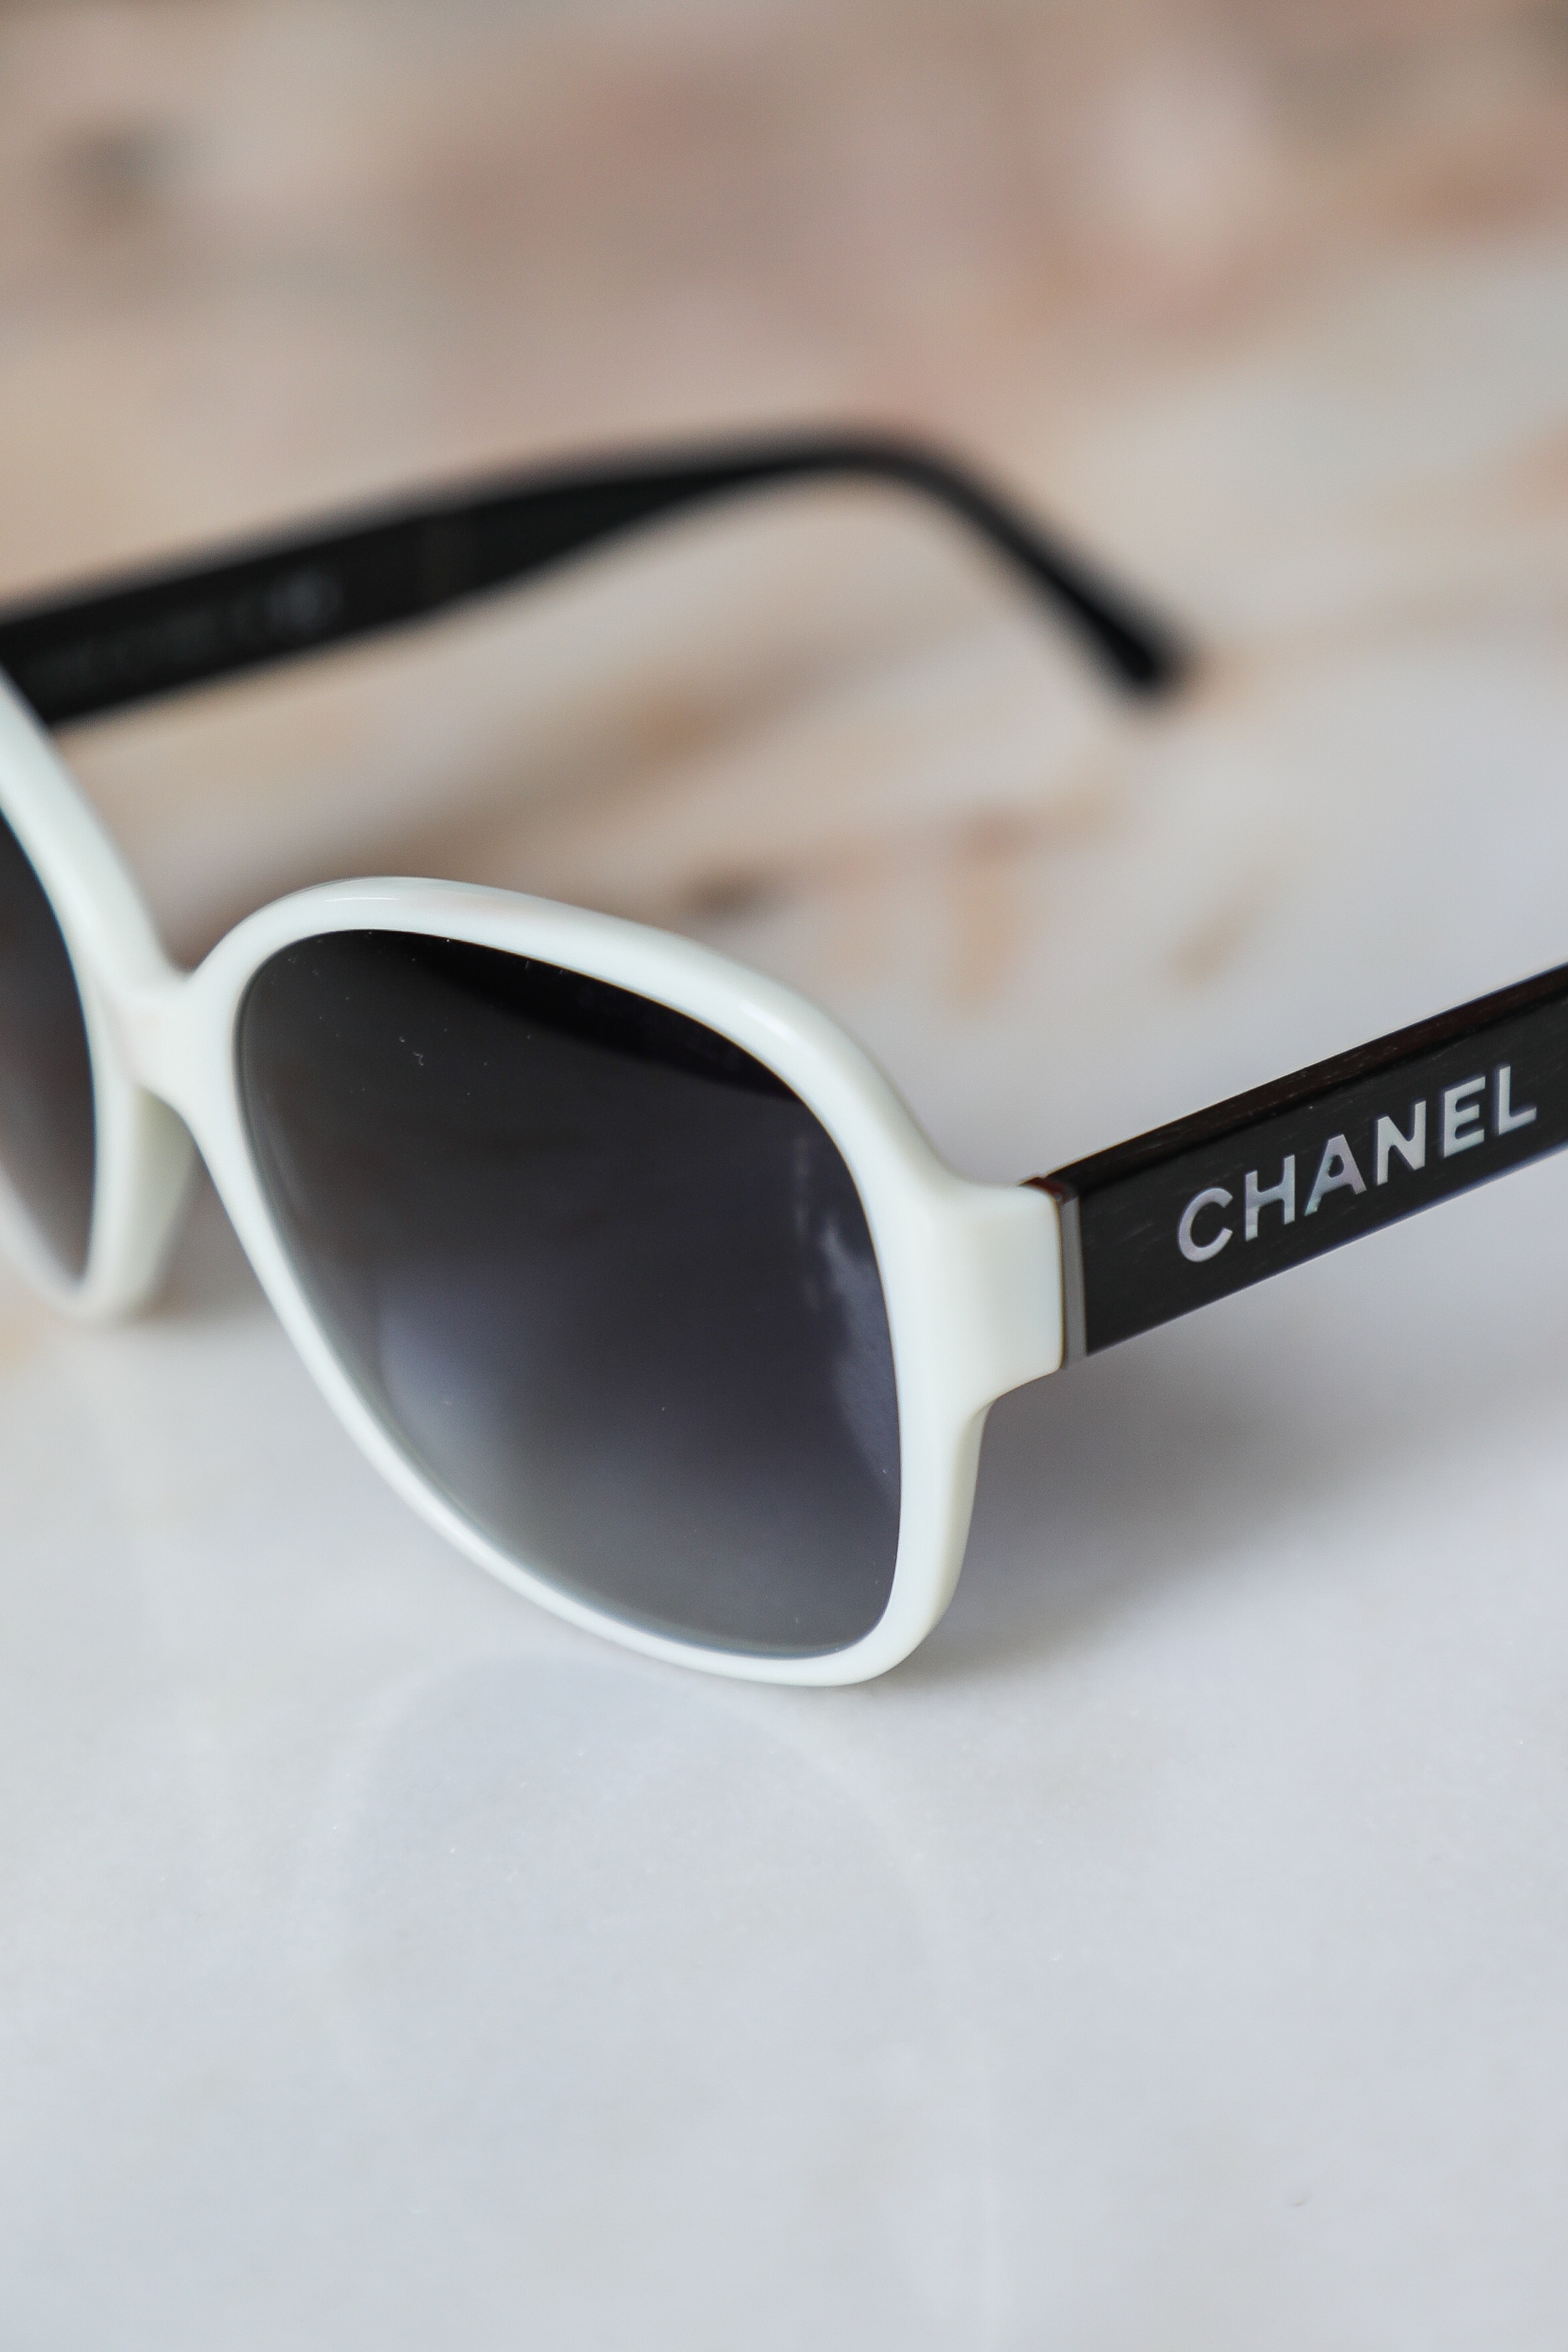 Almægtig Faret vild Inca Empire Chanel logo sunglasses - Veras Vintage